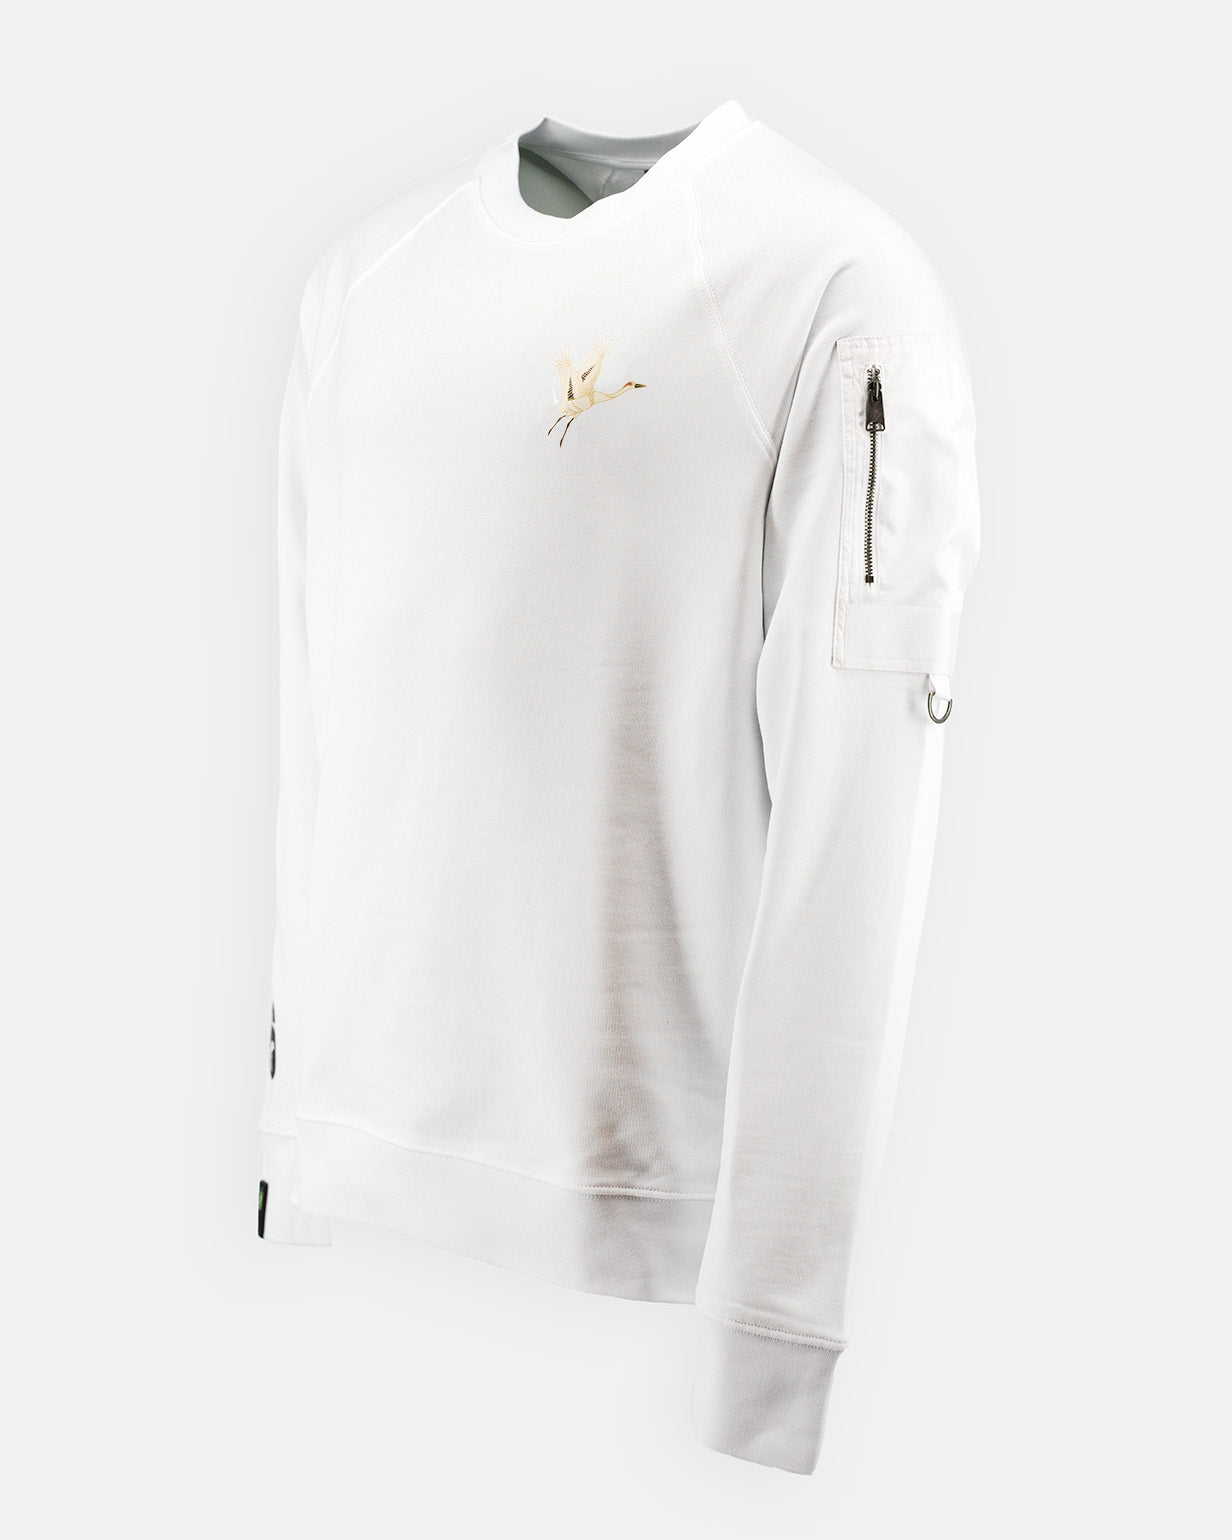 6 SIEGE Azami White Sweatshirt